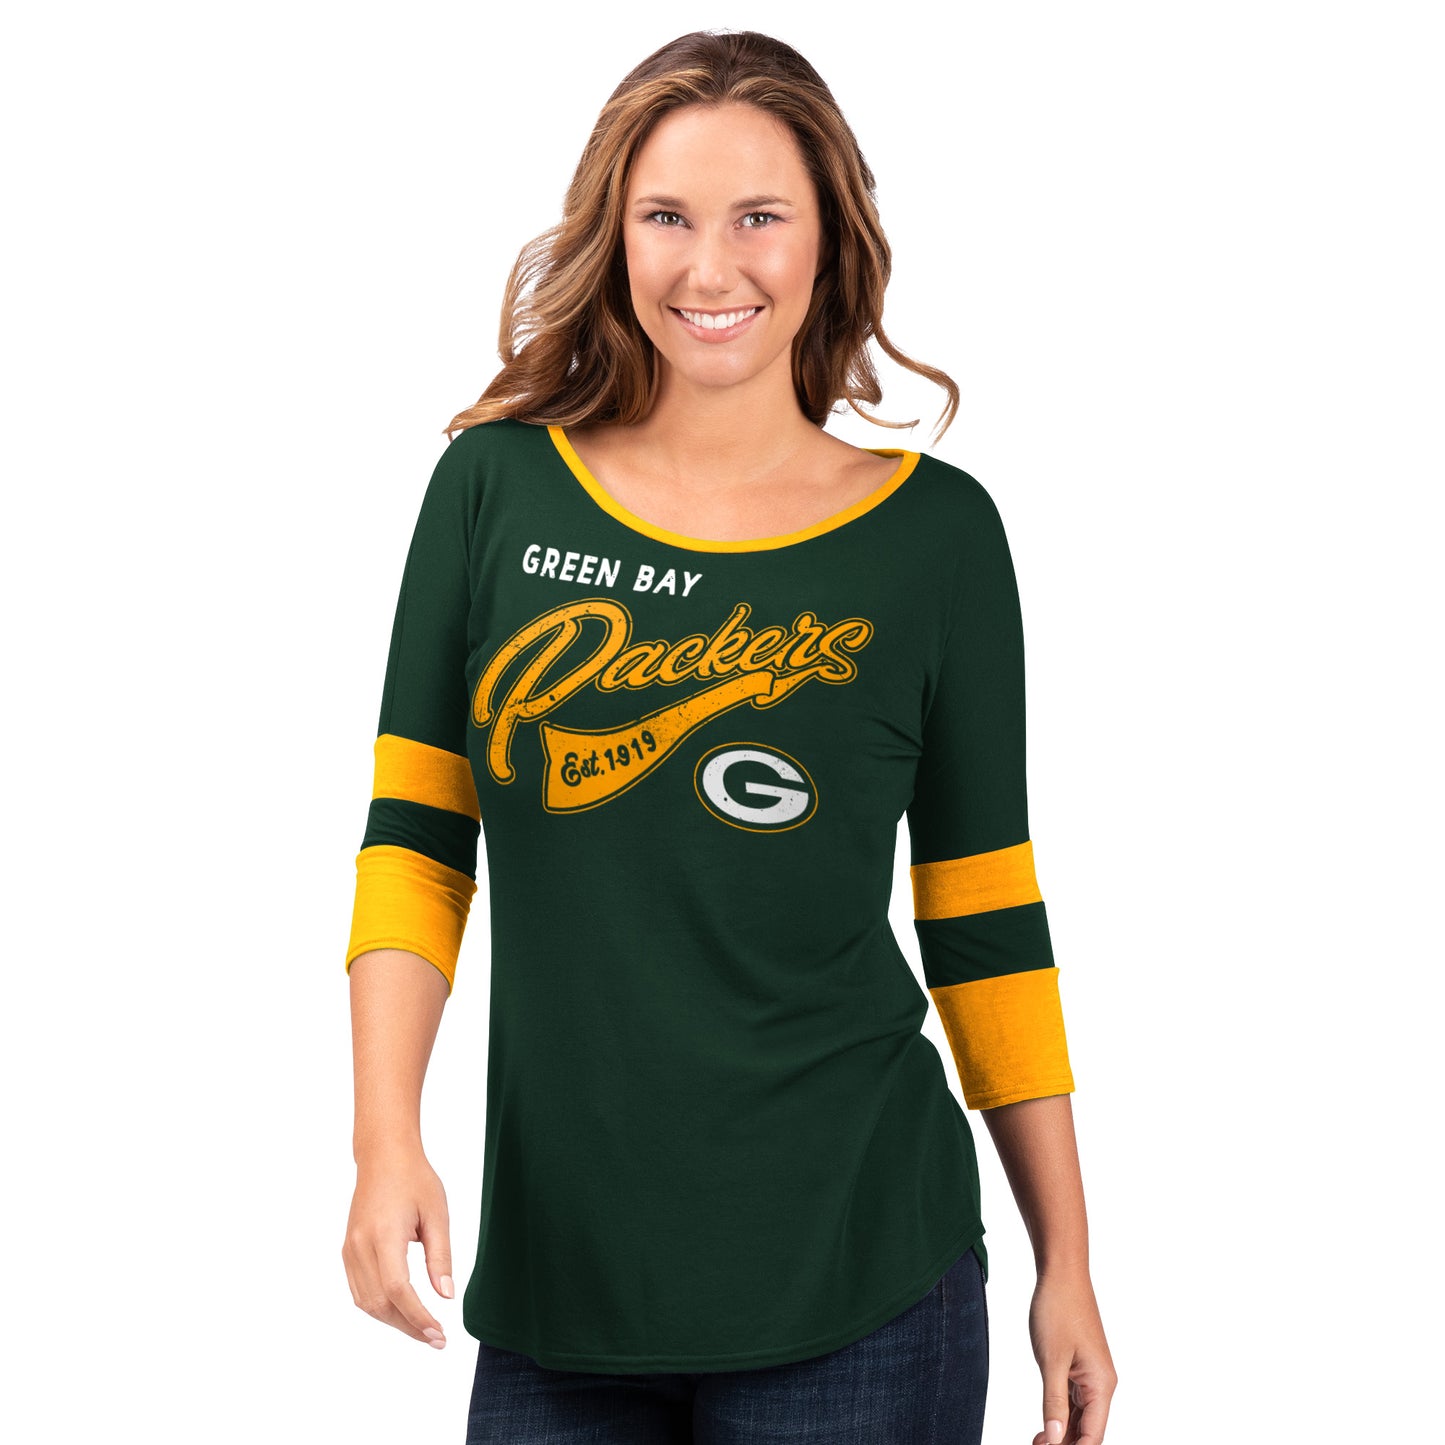 Green Bay Packers Game Changer Women's 3/4 Sleeve Tee Shirt - Green